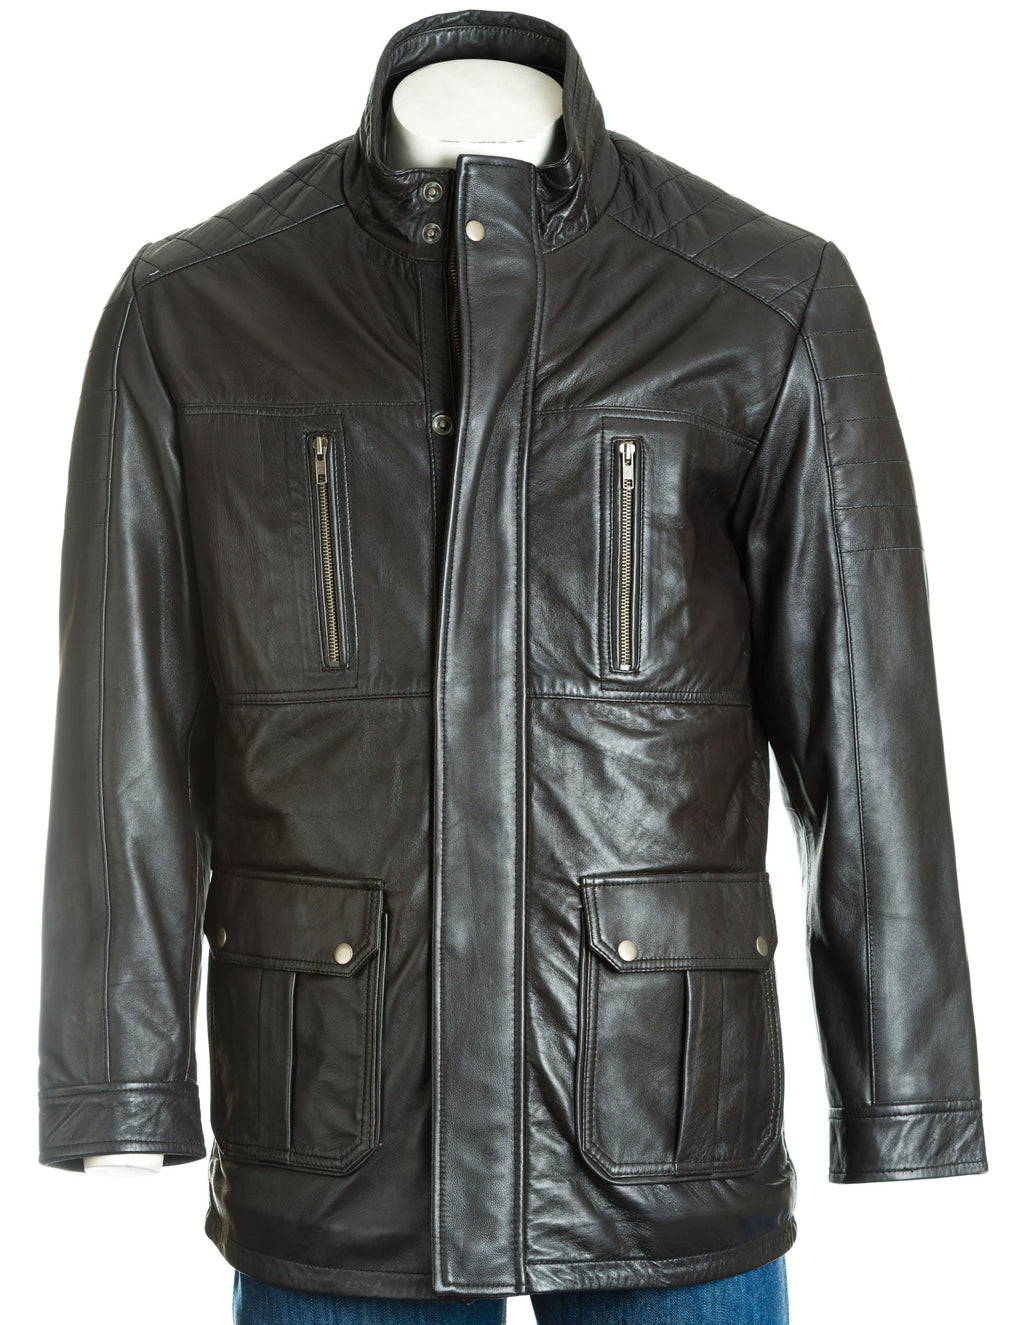 Men's Dark Brown Leather Coat With Shoulder Panel Stitch Detail: Enrico